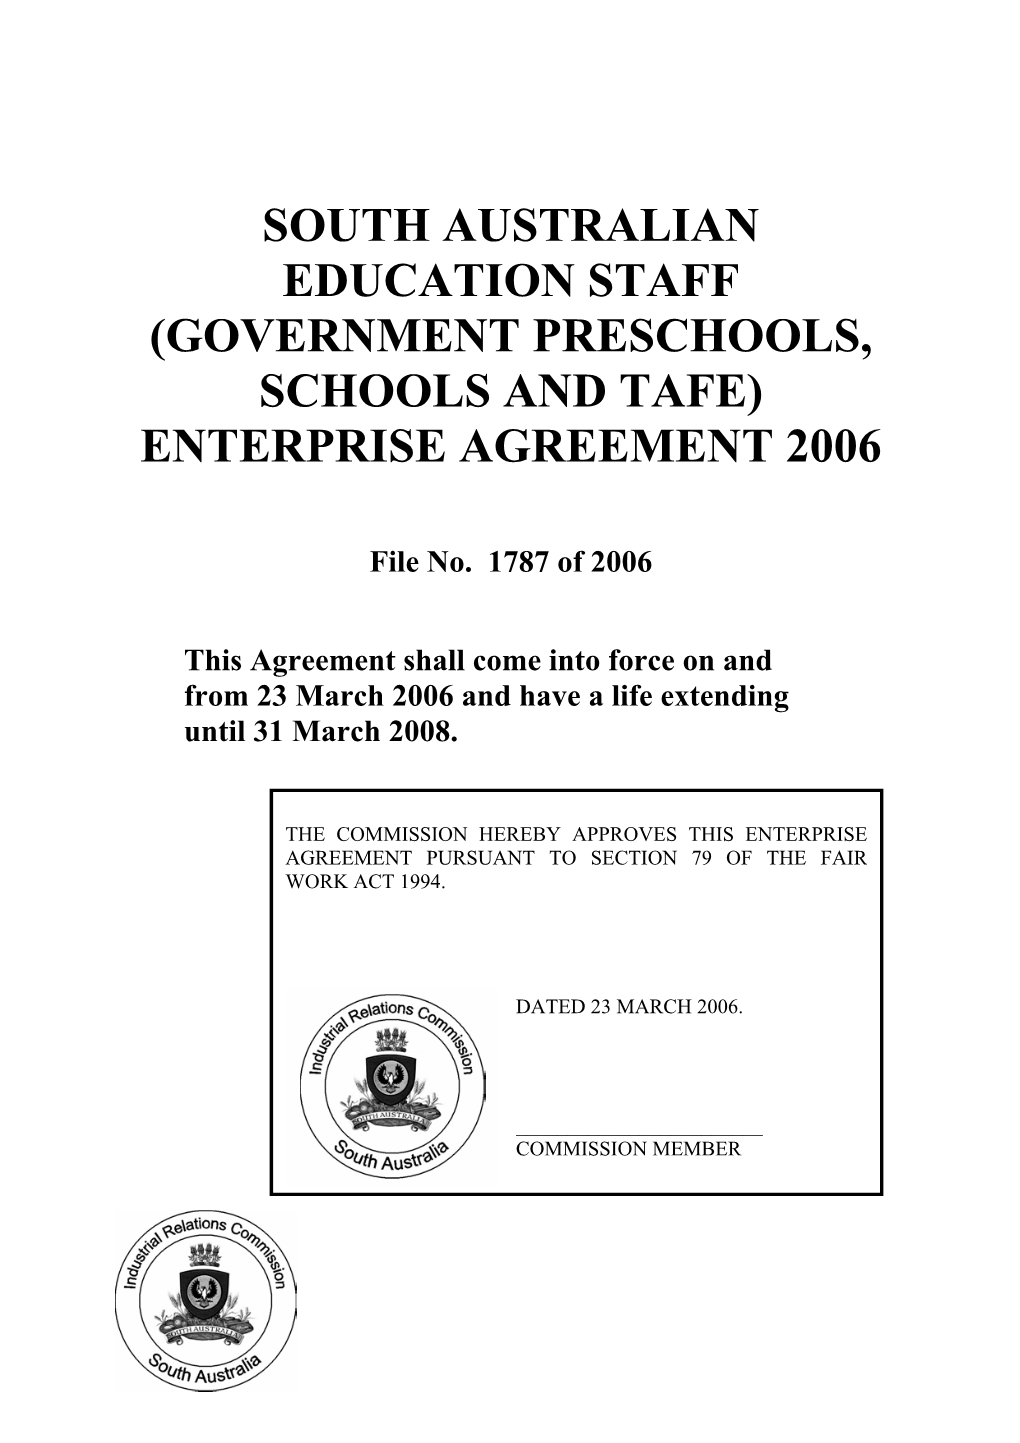 South Australian Education Staff (Government Preschools, Schools and Tafe) Enterprise Agreement 2006